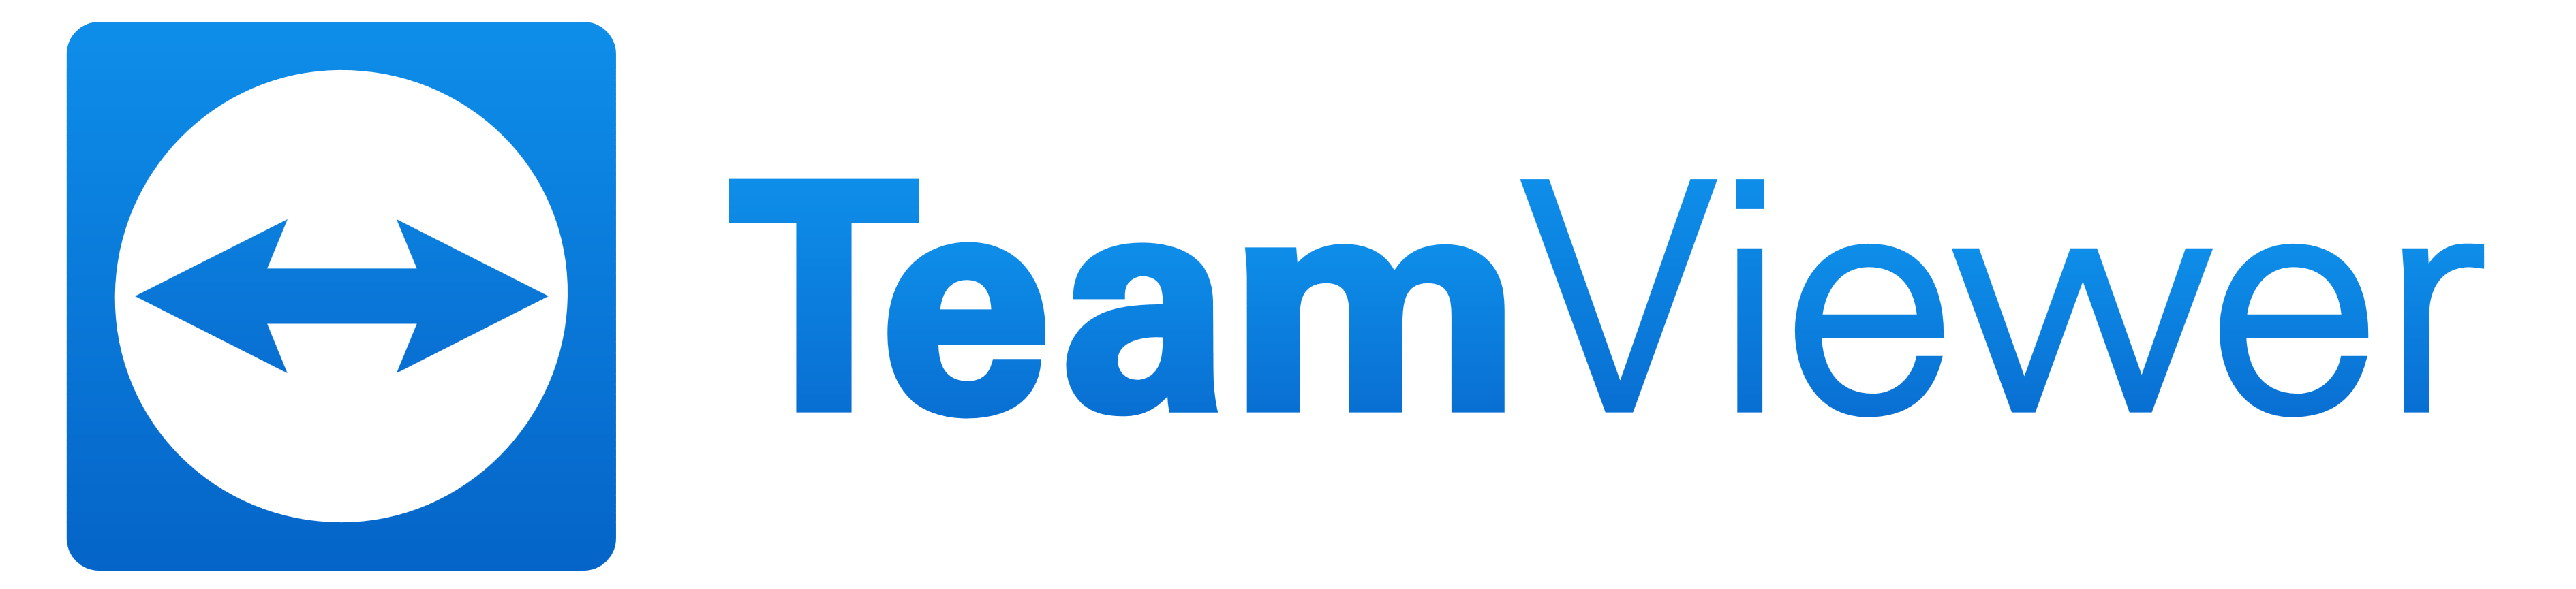 TeamViewer Logos Download